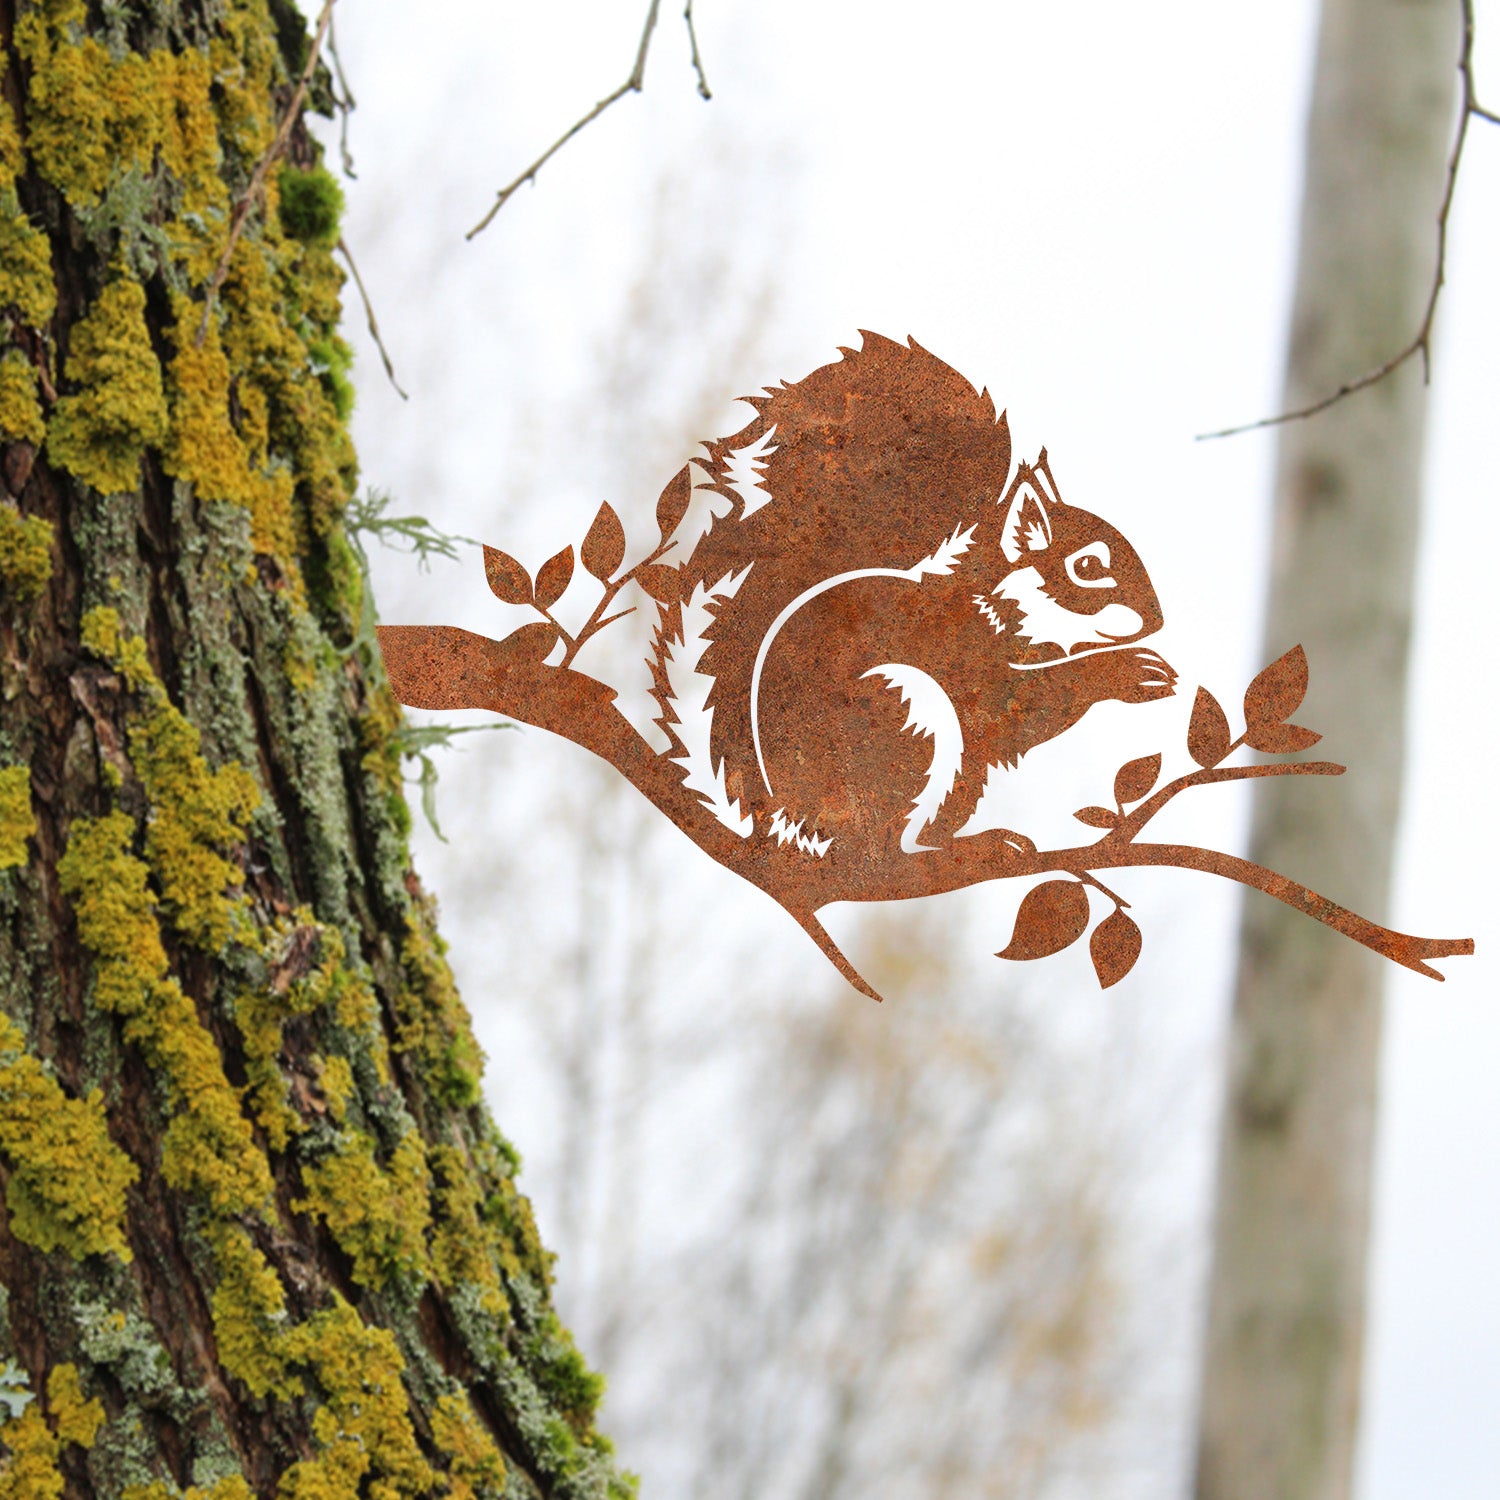 Funny Squirrel Eating Nut On Tree Branch Rustic Metal Tree Decor, Squirrel Iron Garden Artwork